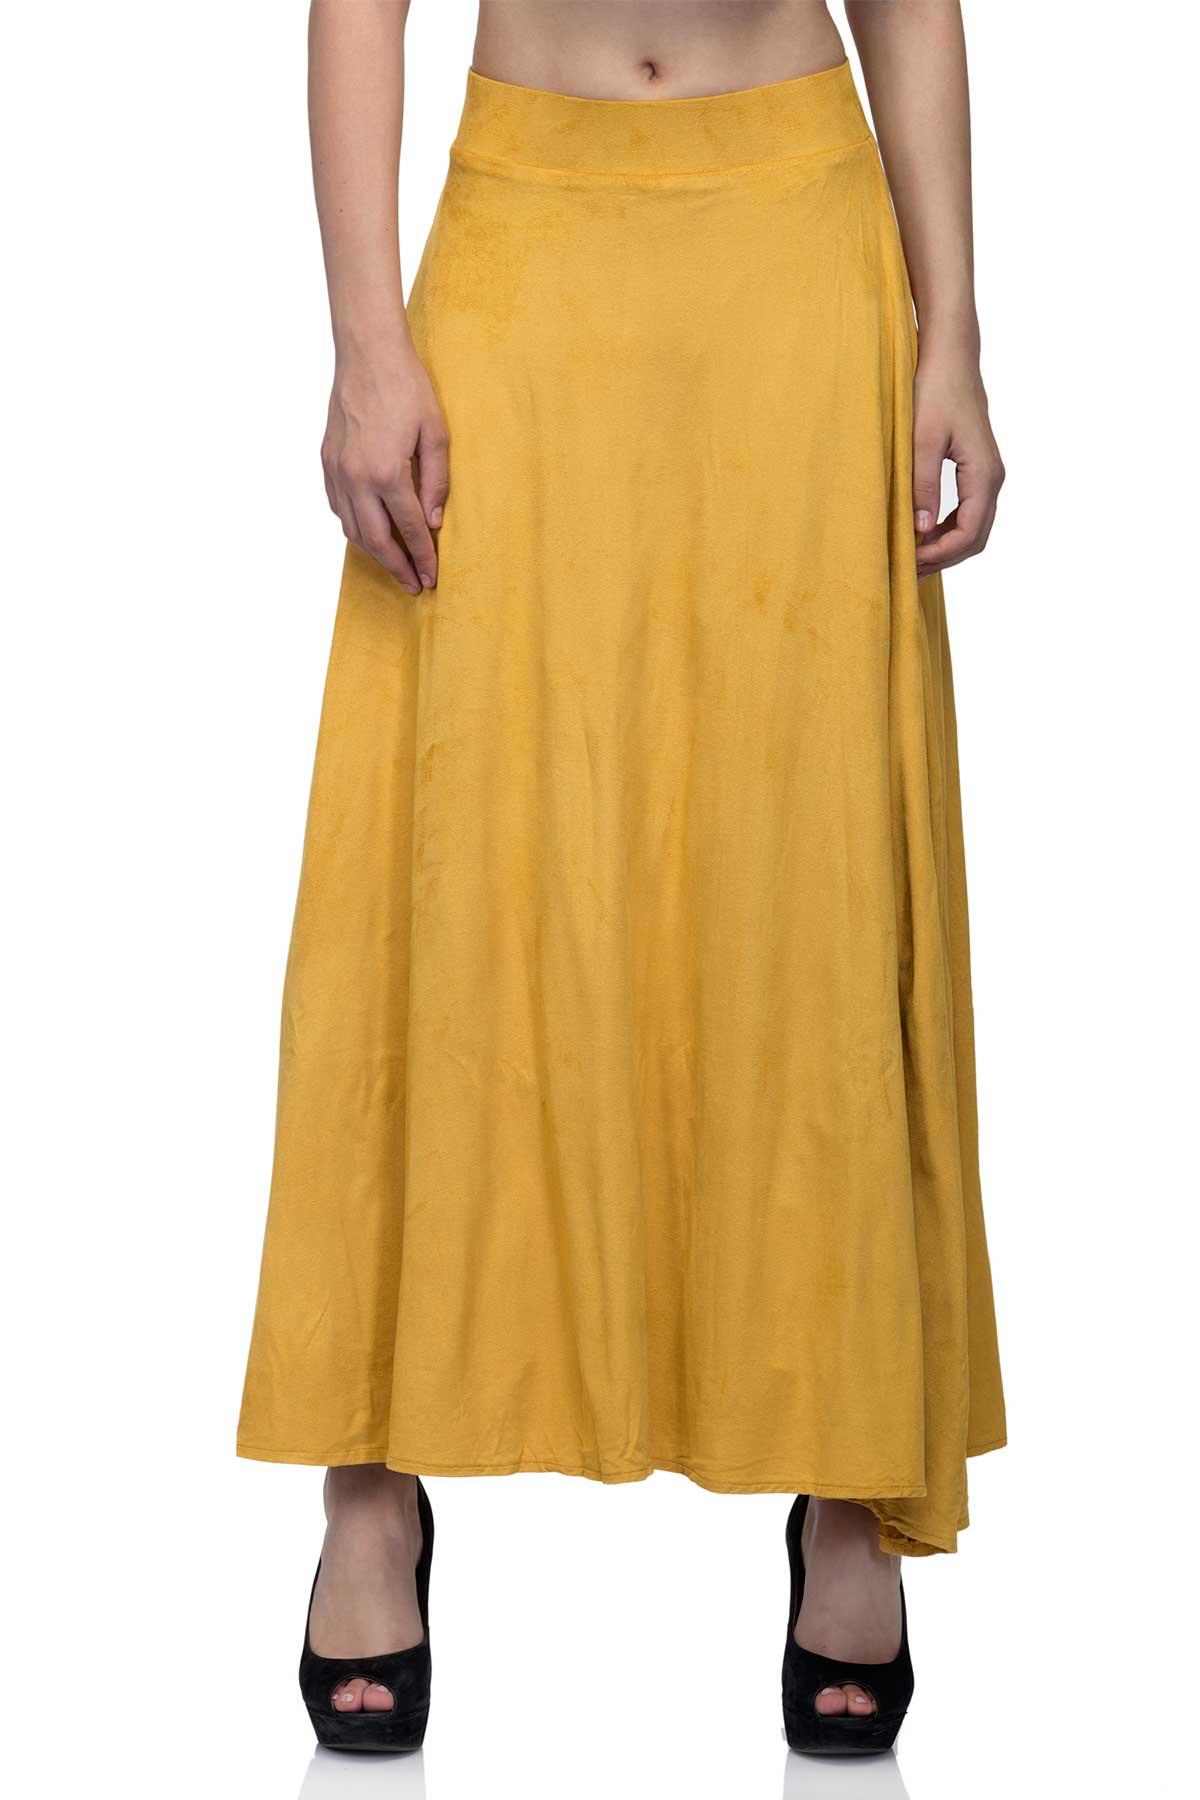 Mustard Yellow Silk Embroidery Hand Butta Work Kurti  Skirt  BRITHIKA  Luxury Fashion